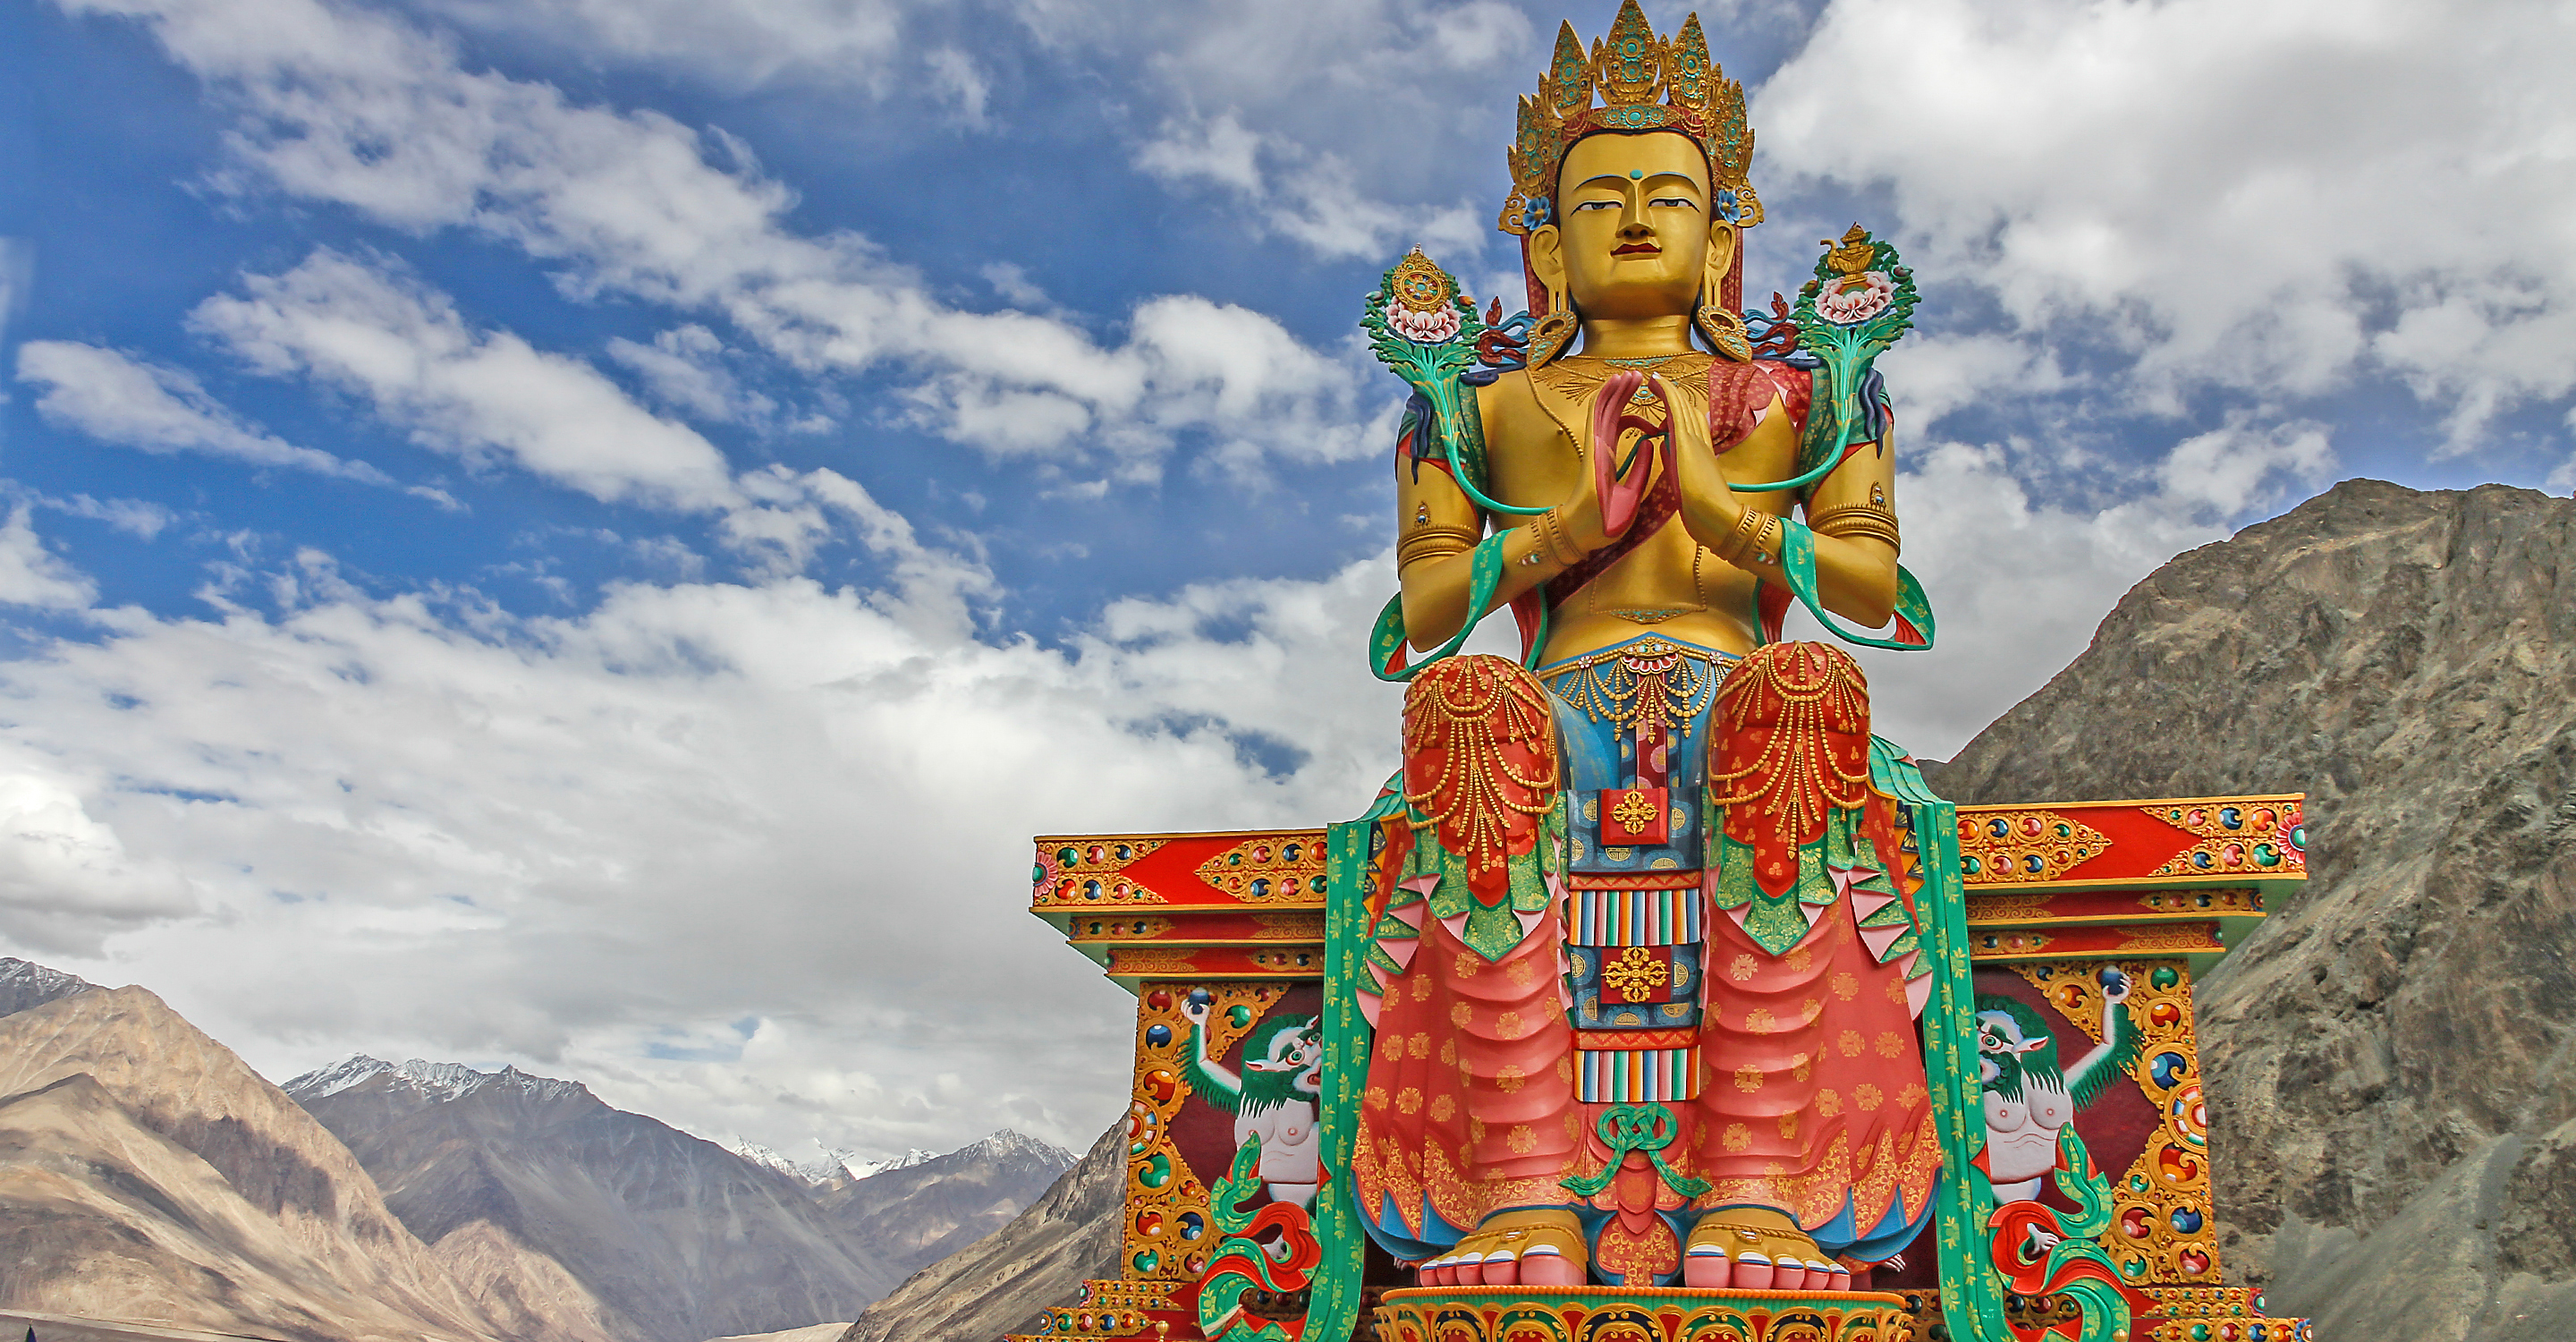 A sitting Buddha statue at the Diskit Monastery in Nubra Valley, Ladakh, India